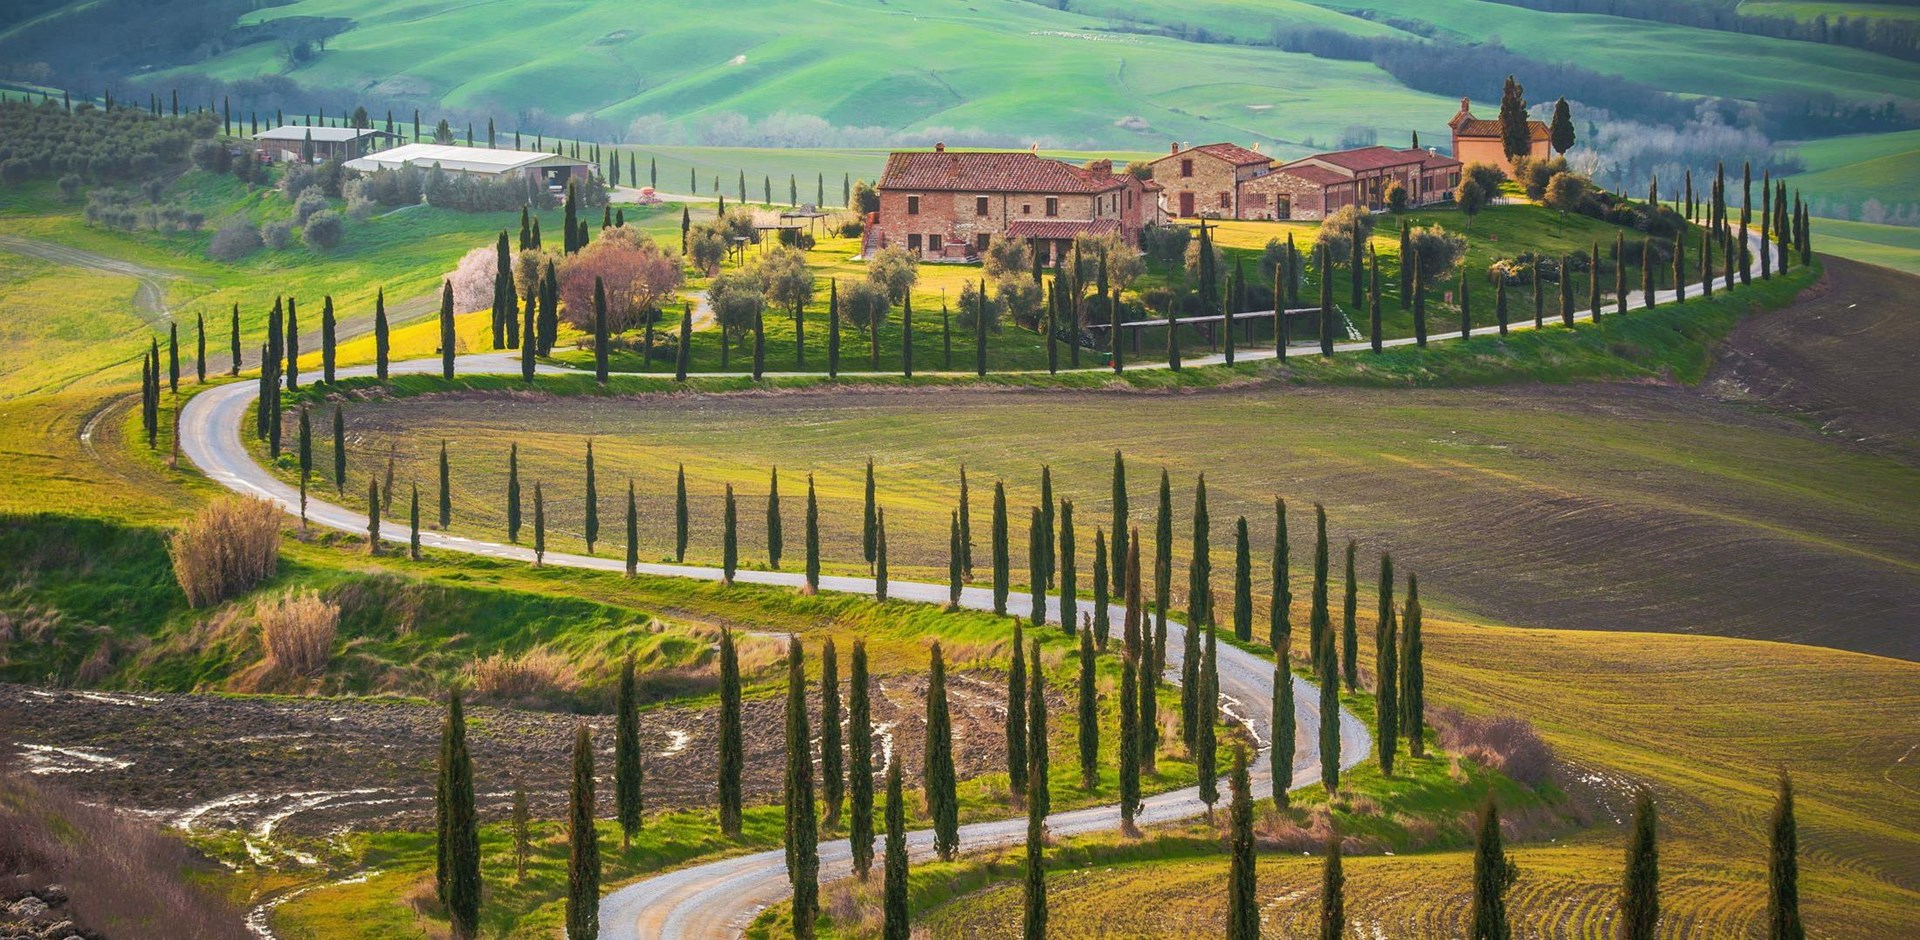 000956_Sunny fields in Tuscany_Shutterstock_180212603-Hybris